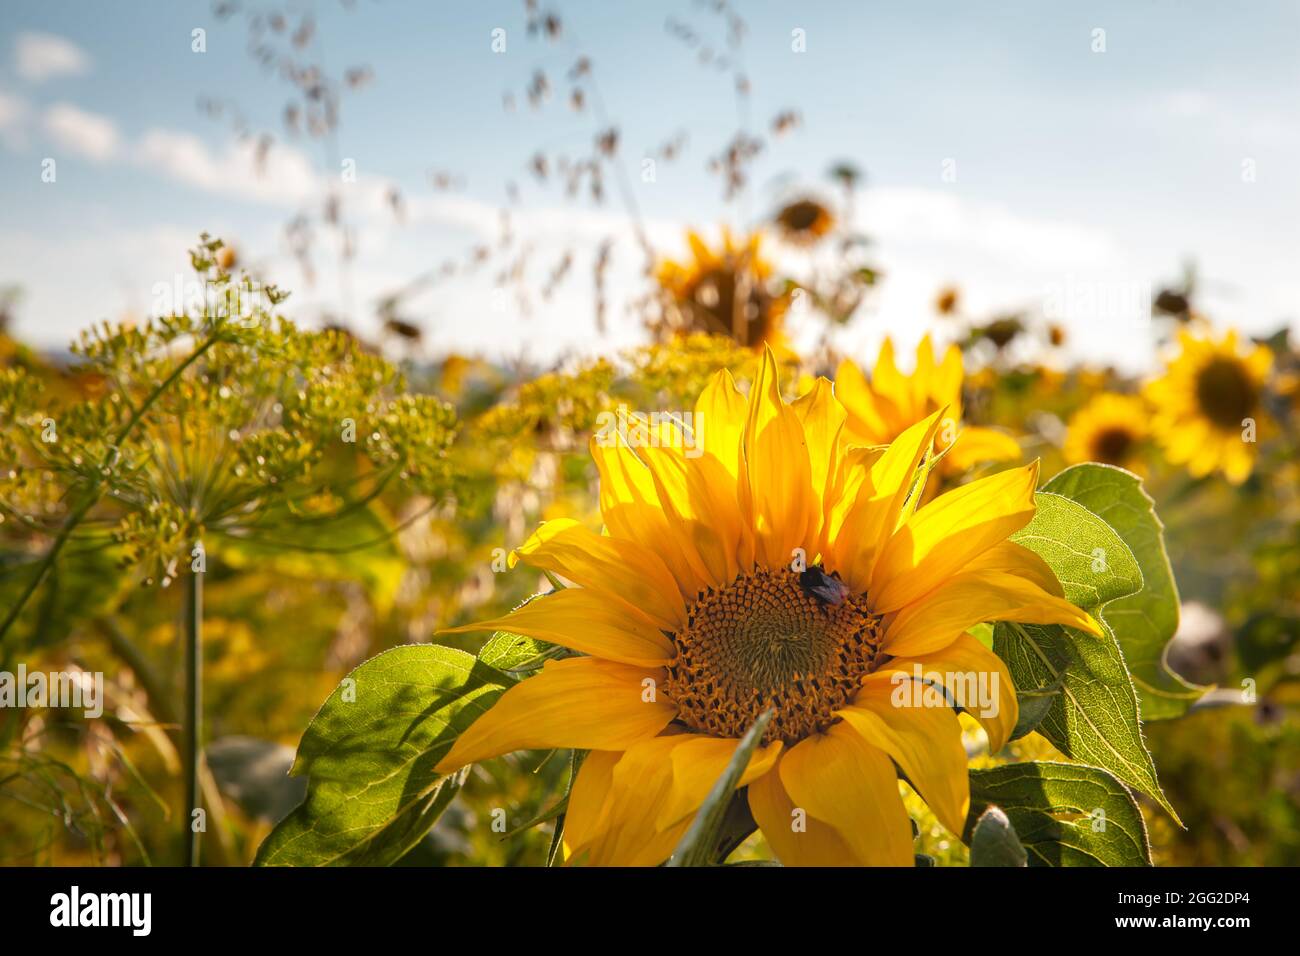 Wild sunflower field in the bright  sunlight, Stock Photo